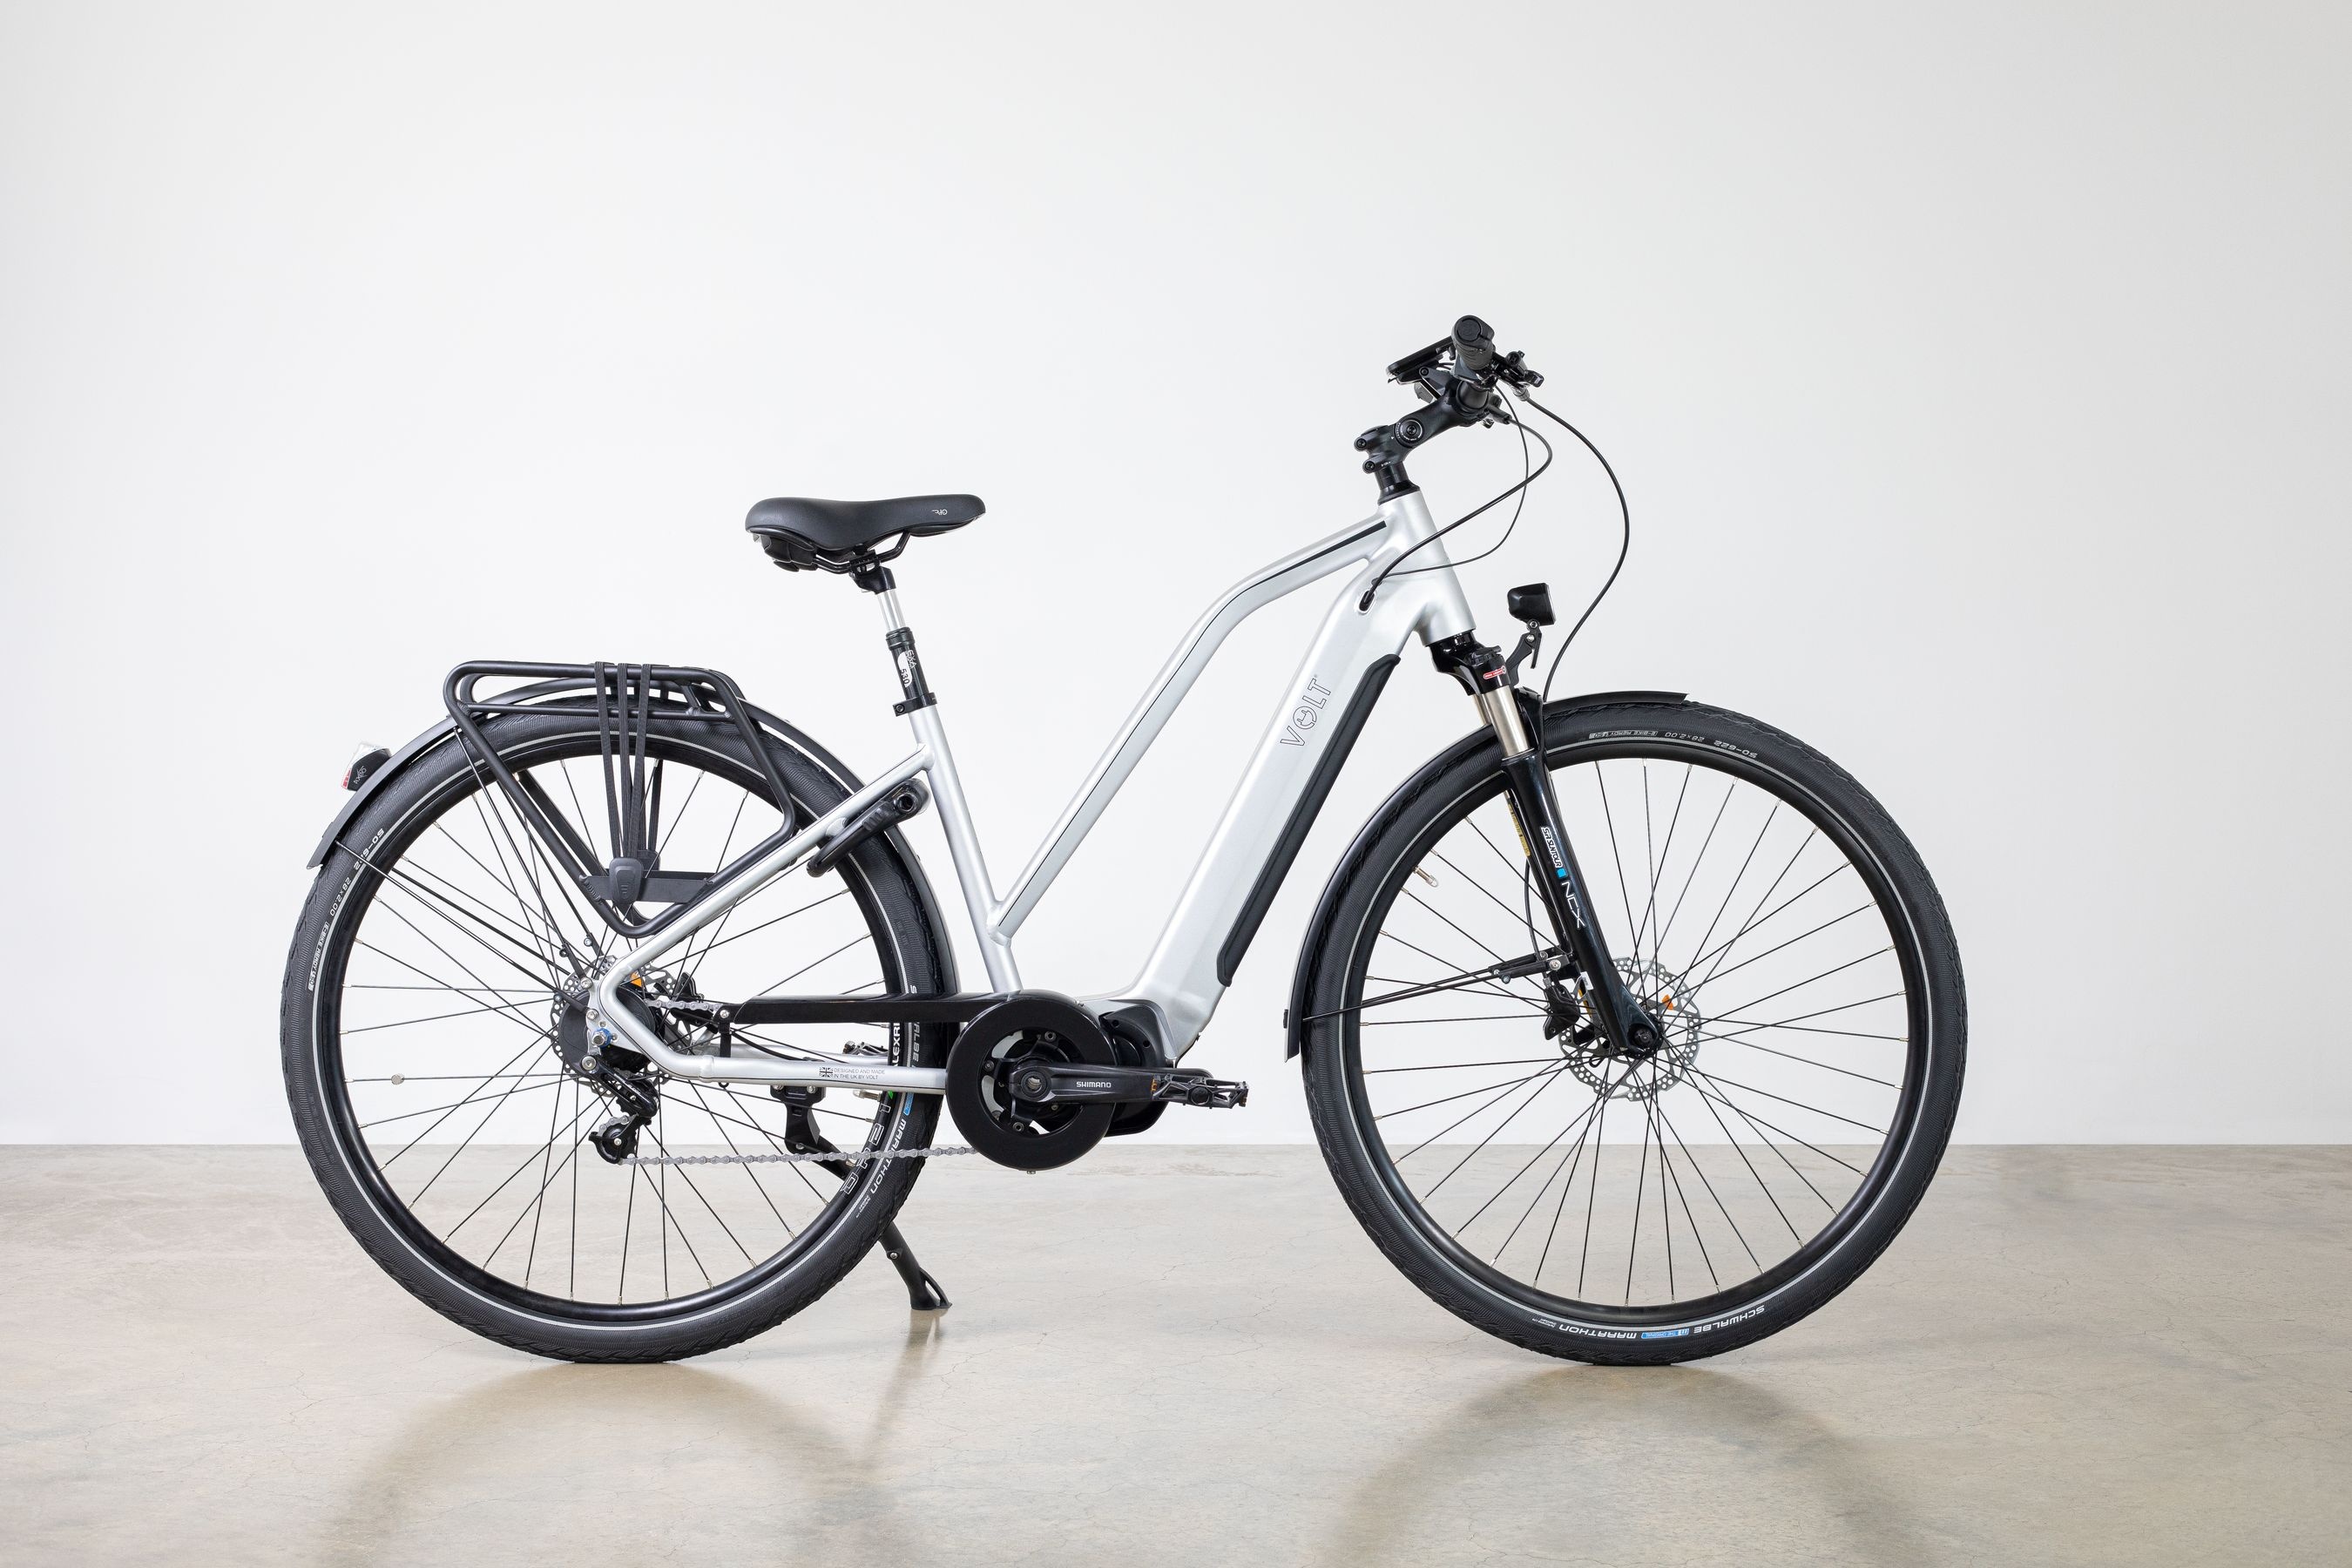 Shimano Steps e-bike, Efficient electric assistance, Long-lasting battery, Sustainable transportation, 2700x1800 HD Desktop